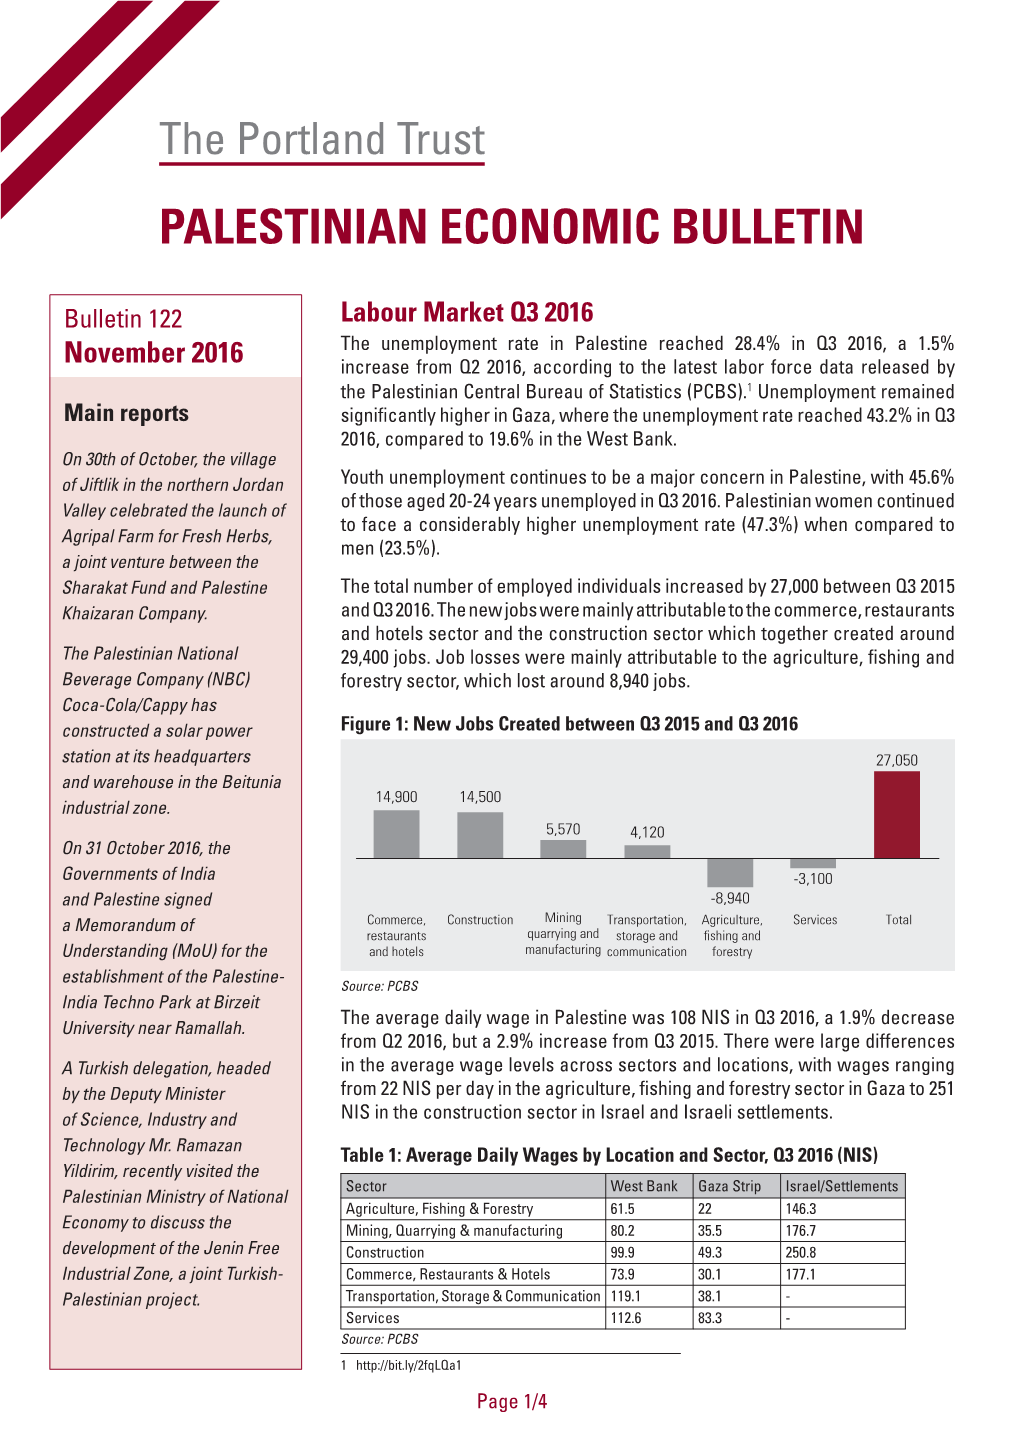 The Portland Trust's Palestinian Economic Bulletin